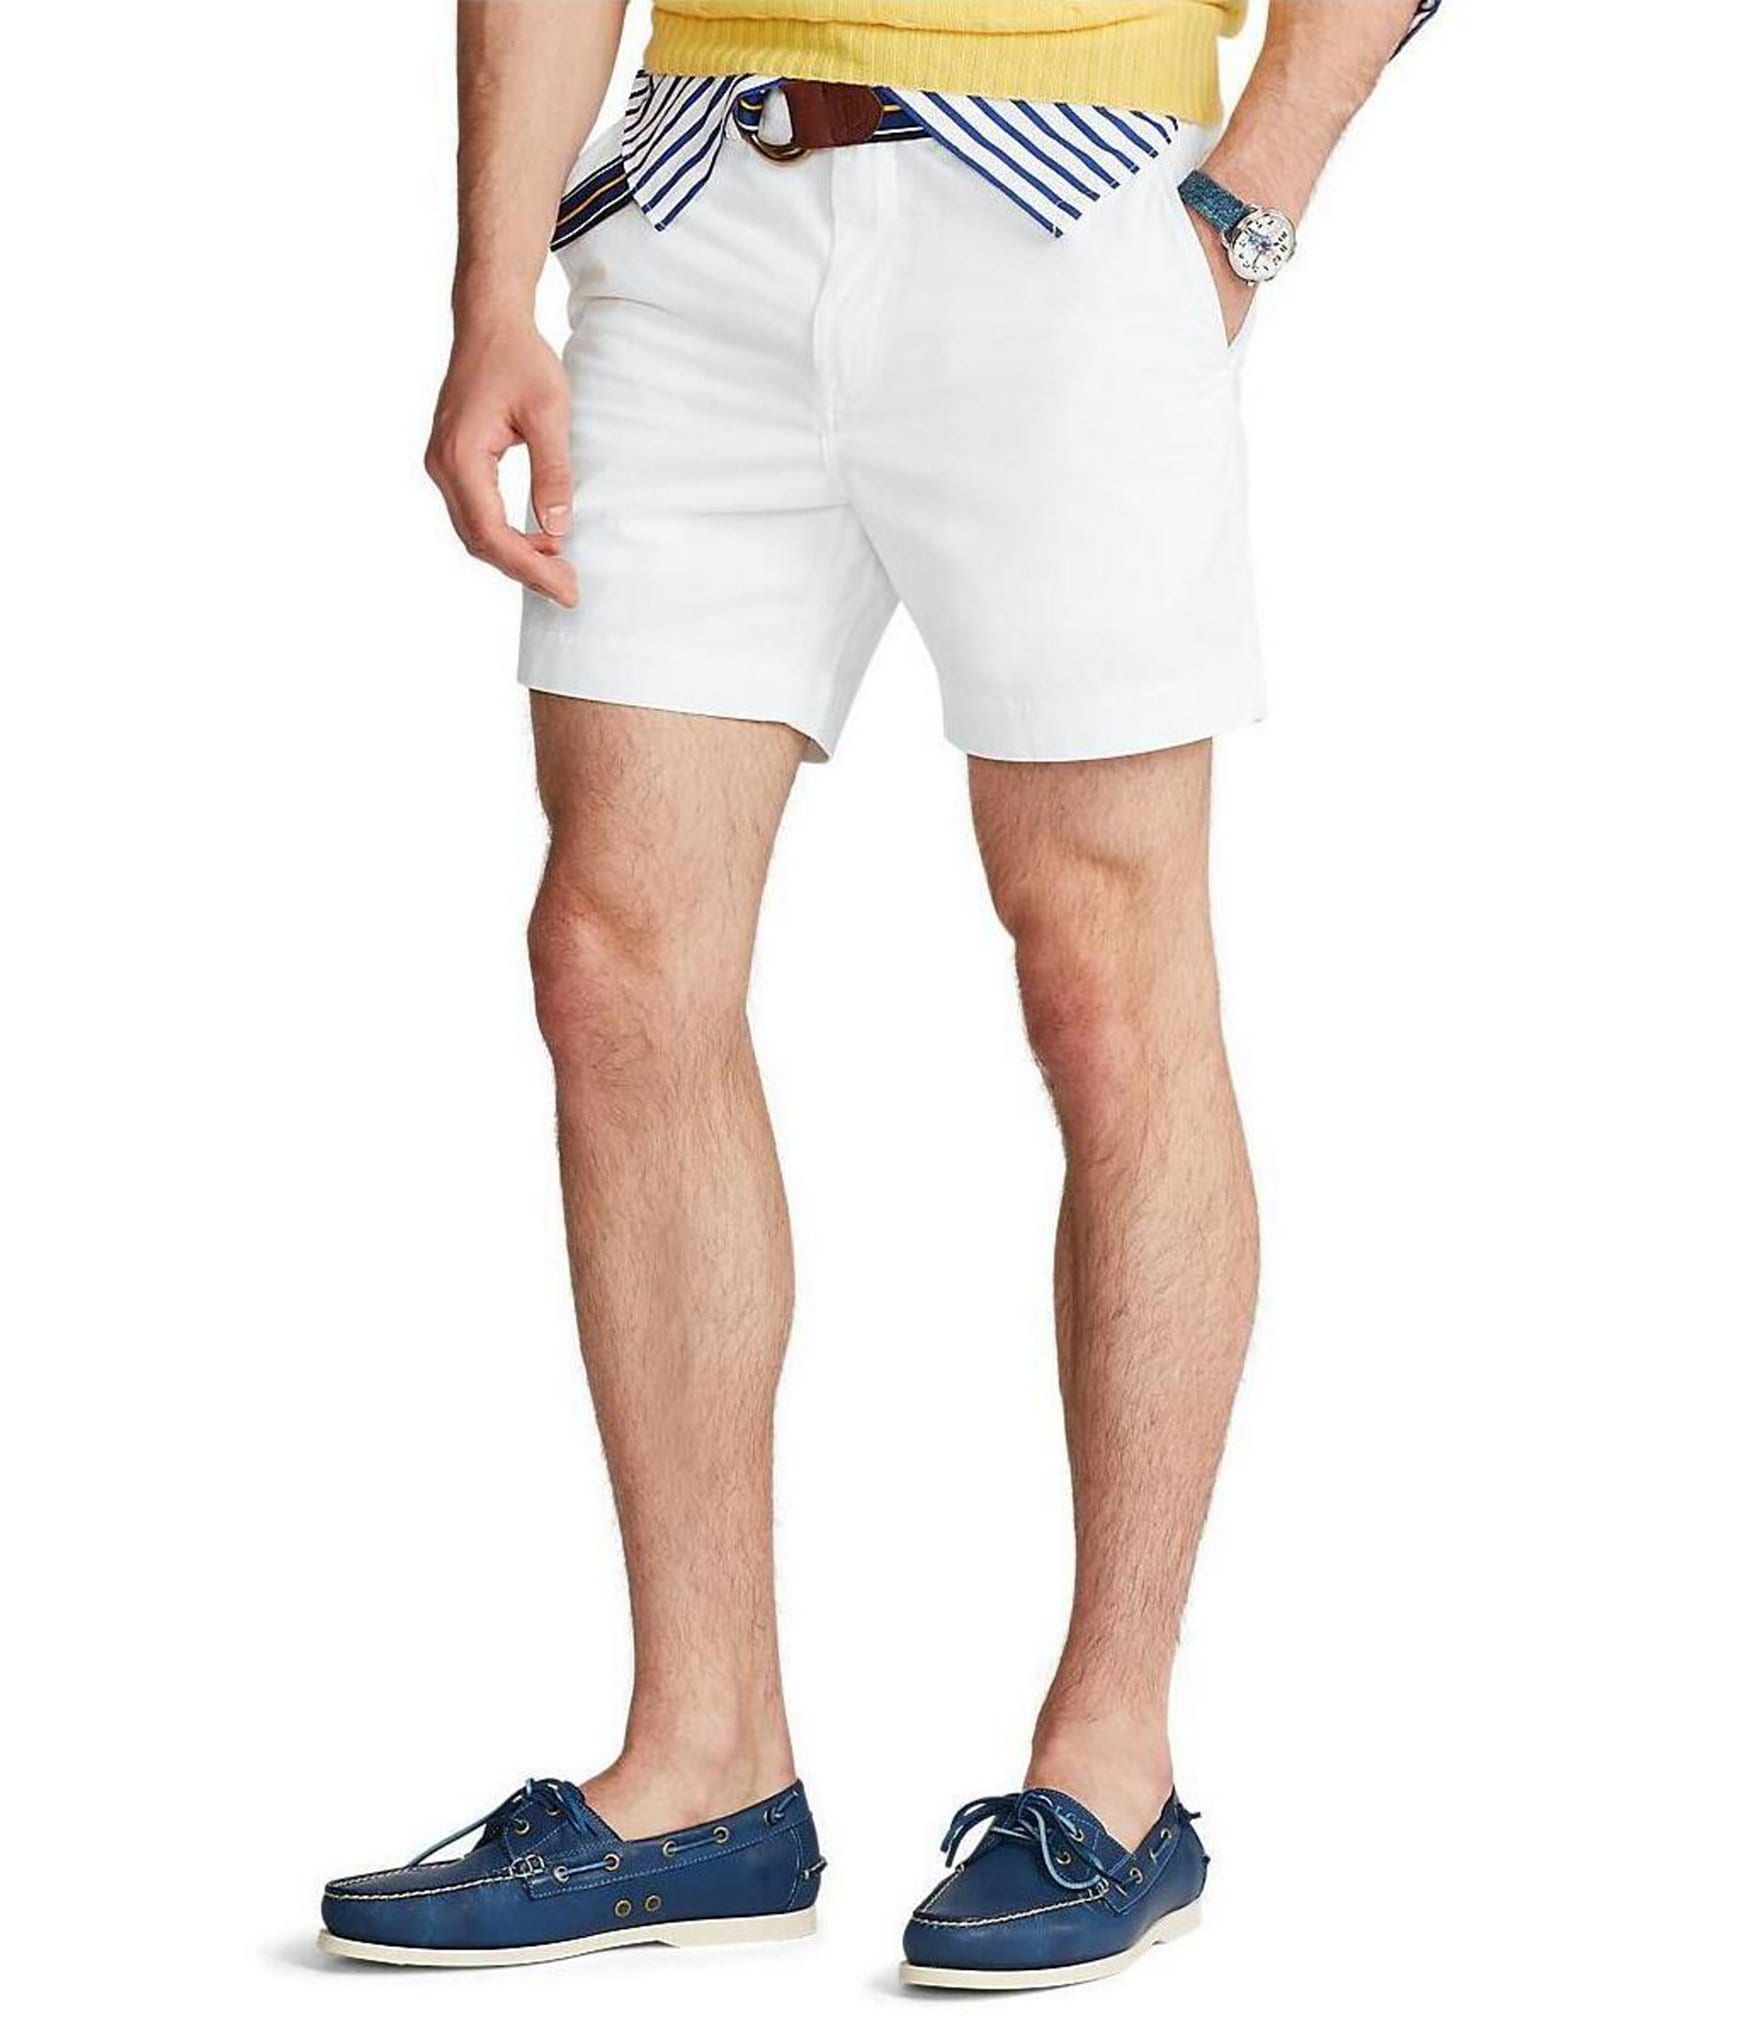 polo ralph lauren 6 inch shorts